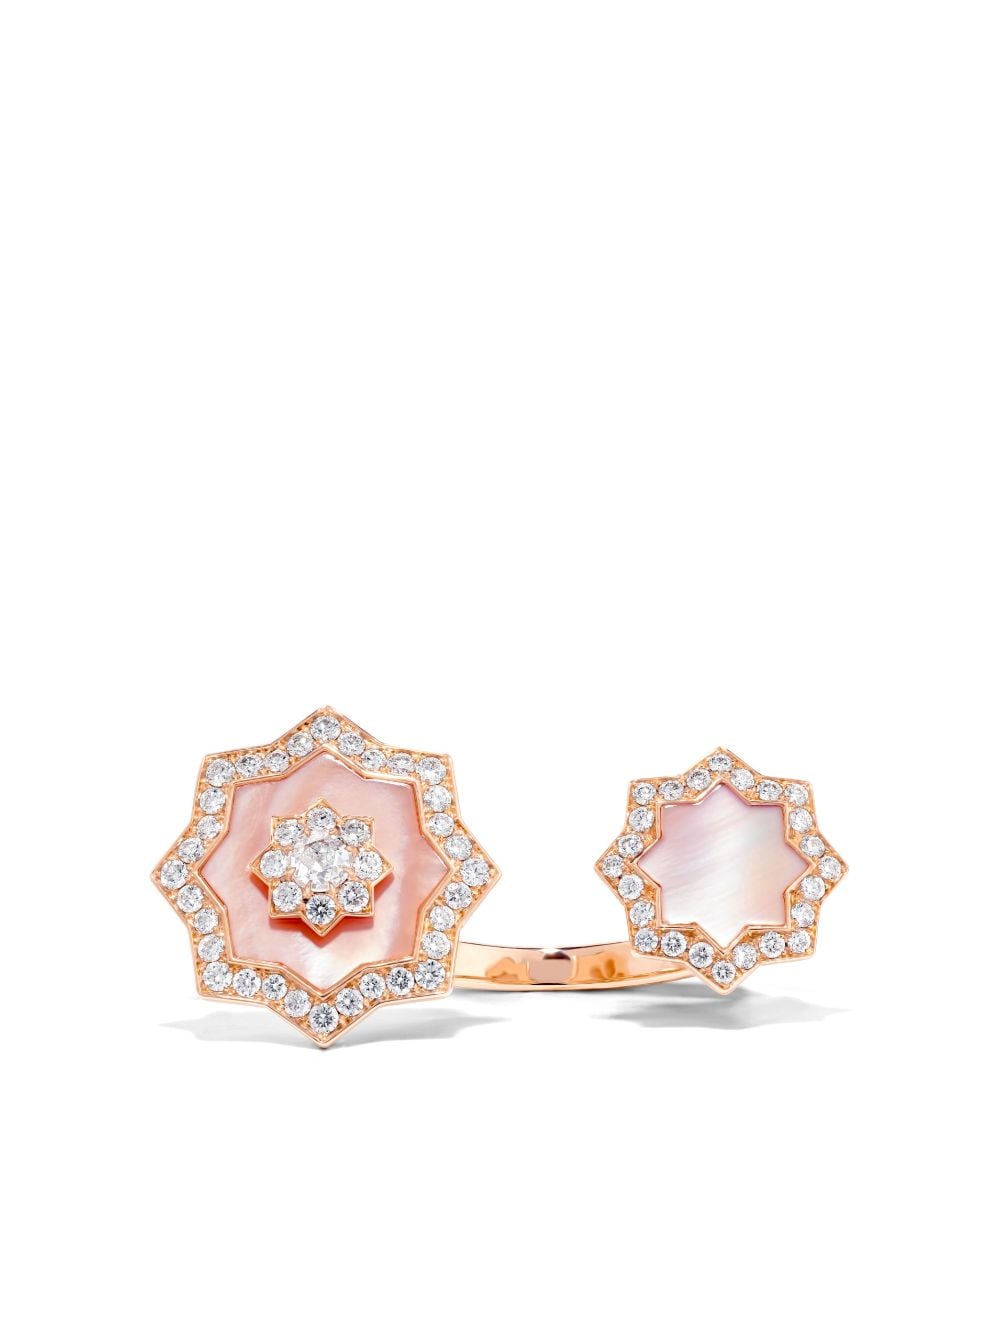 David Morris 18kt rose gold Astra diamond and mother-of-pearl ring - Pink von David Morris